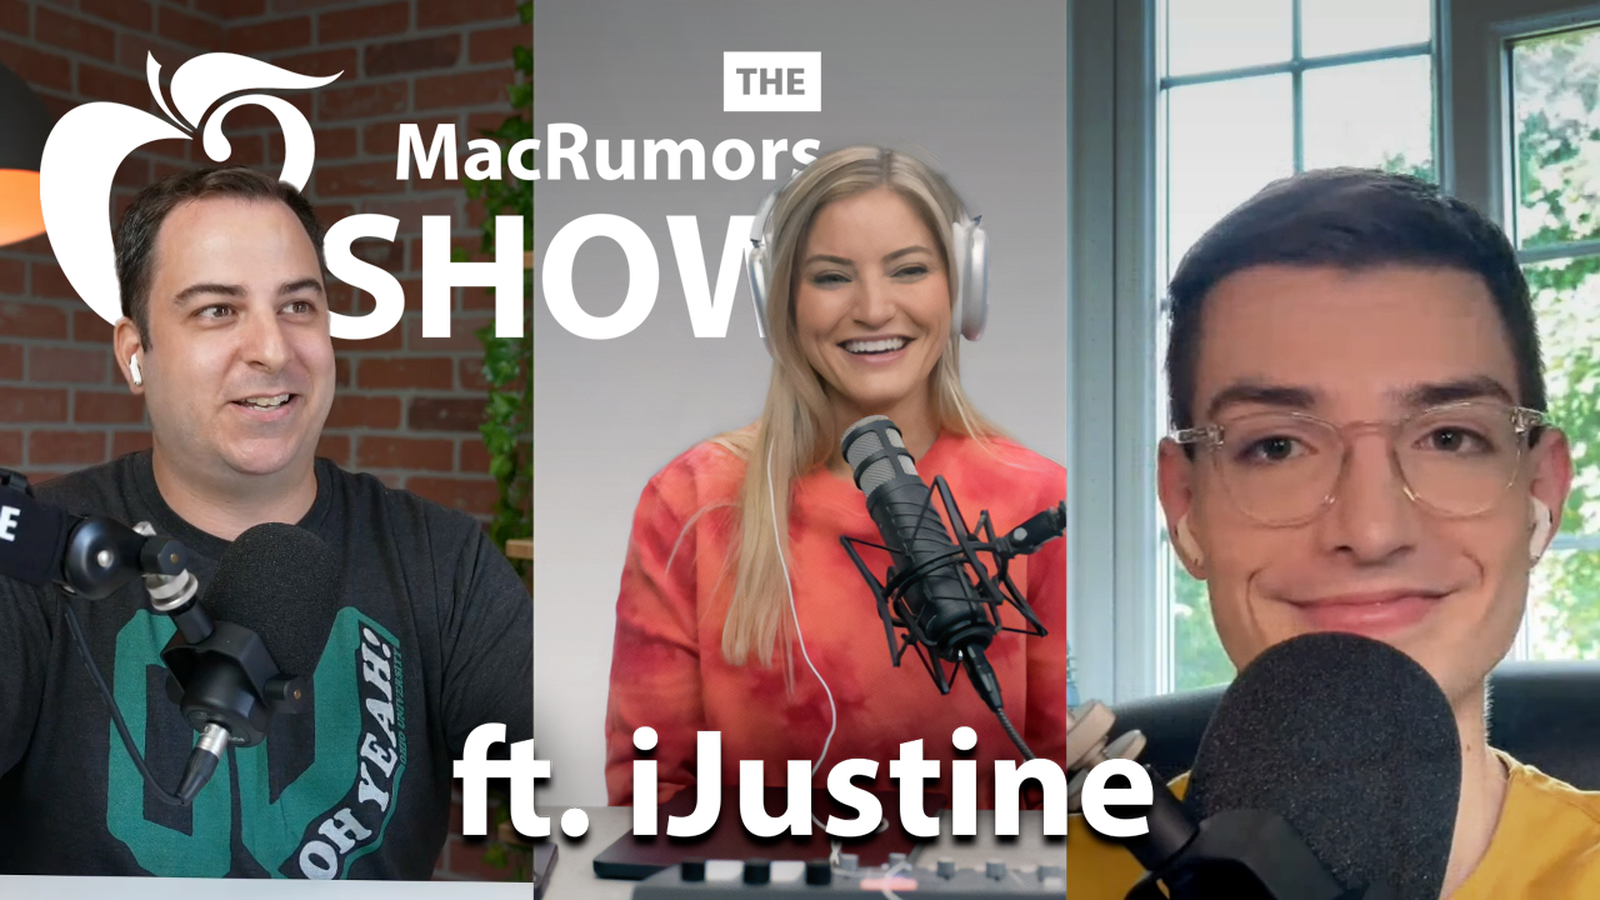 The MacRumors Show: M2 MacBook Air First Impressions ft. iJustine